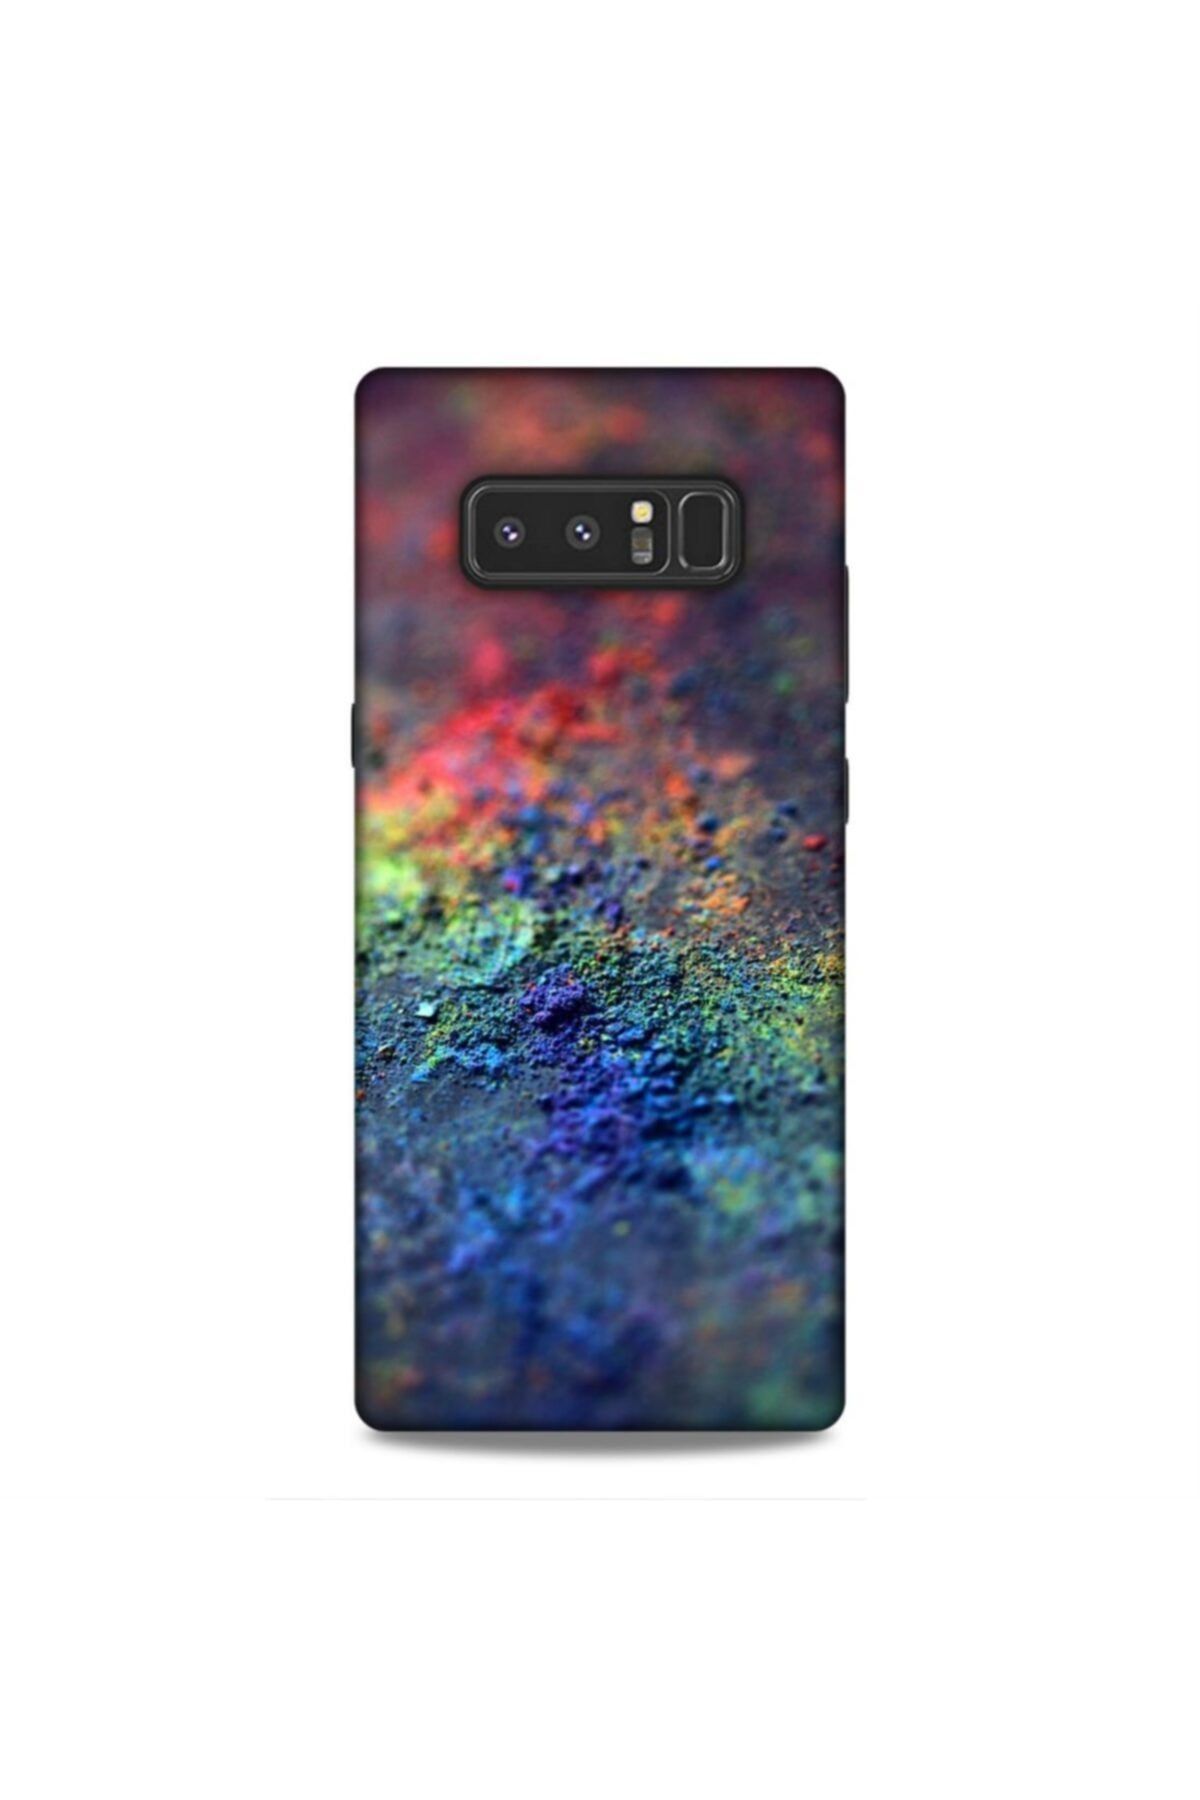 Pickcase Samsung Galaxy Note 8 Kılıf Desenli Arka Kapak Renkli Toprak